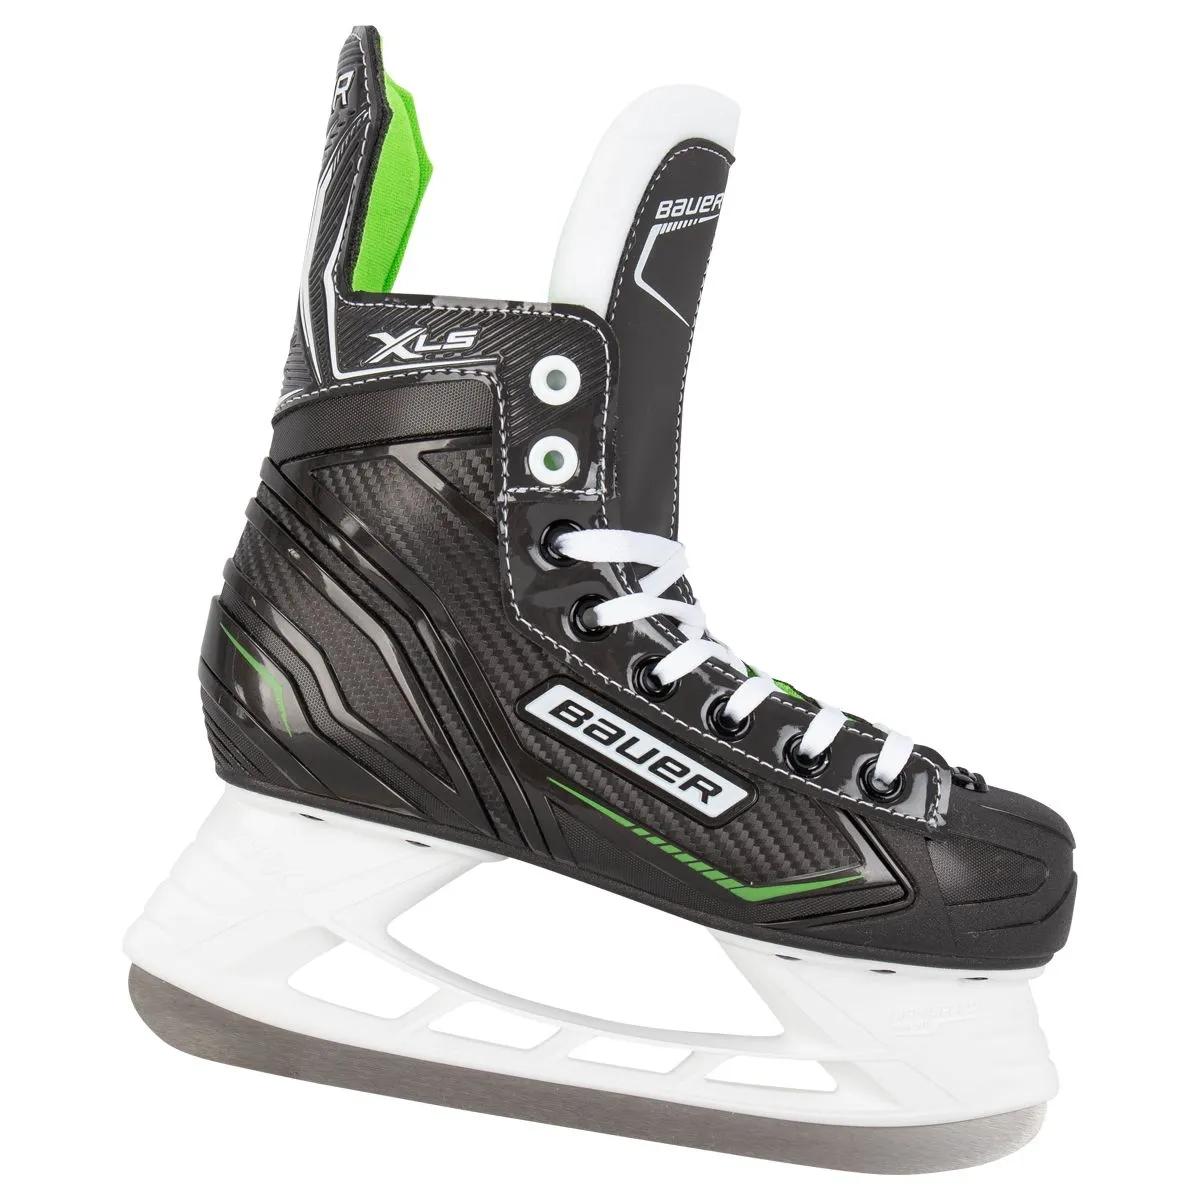 Bauer X-LS Jr. Hockey Skatesproduct zoom image #3